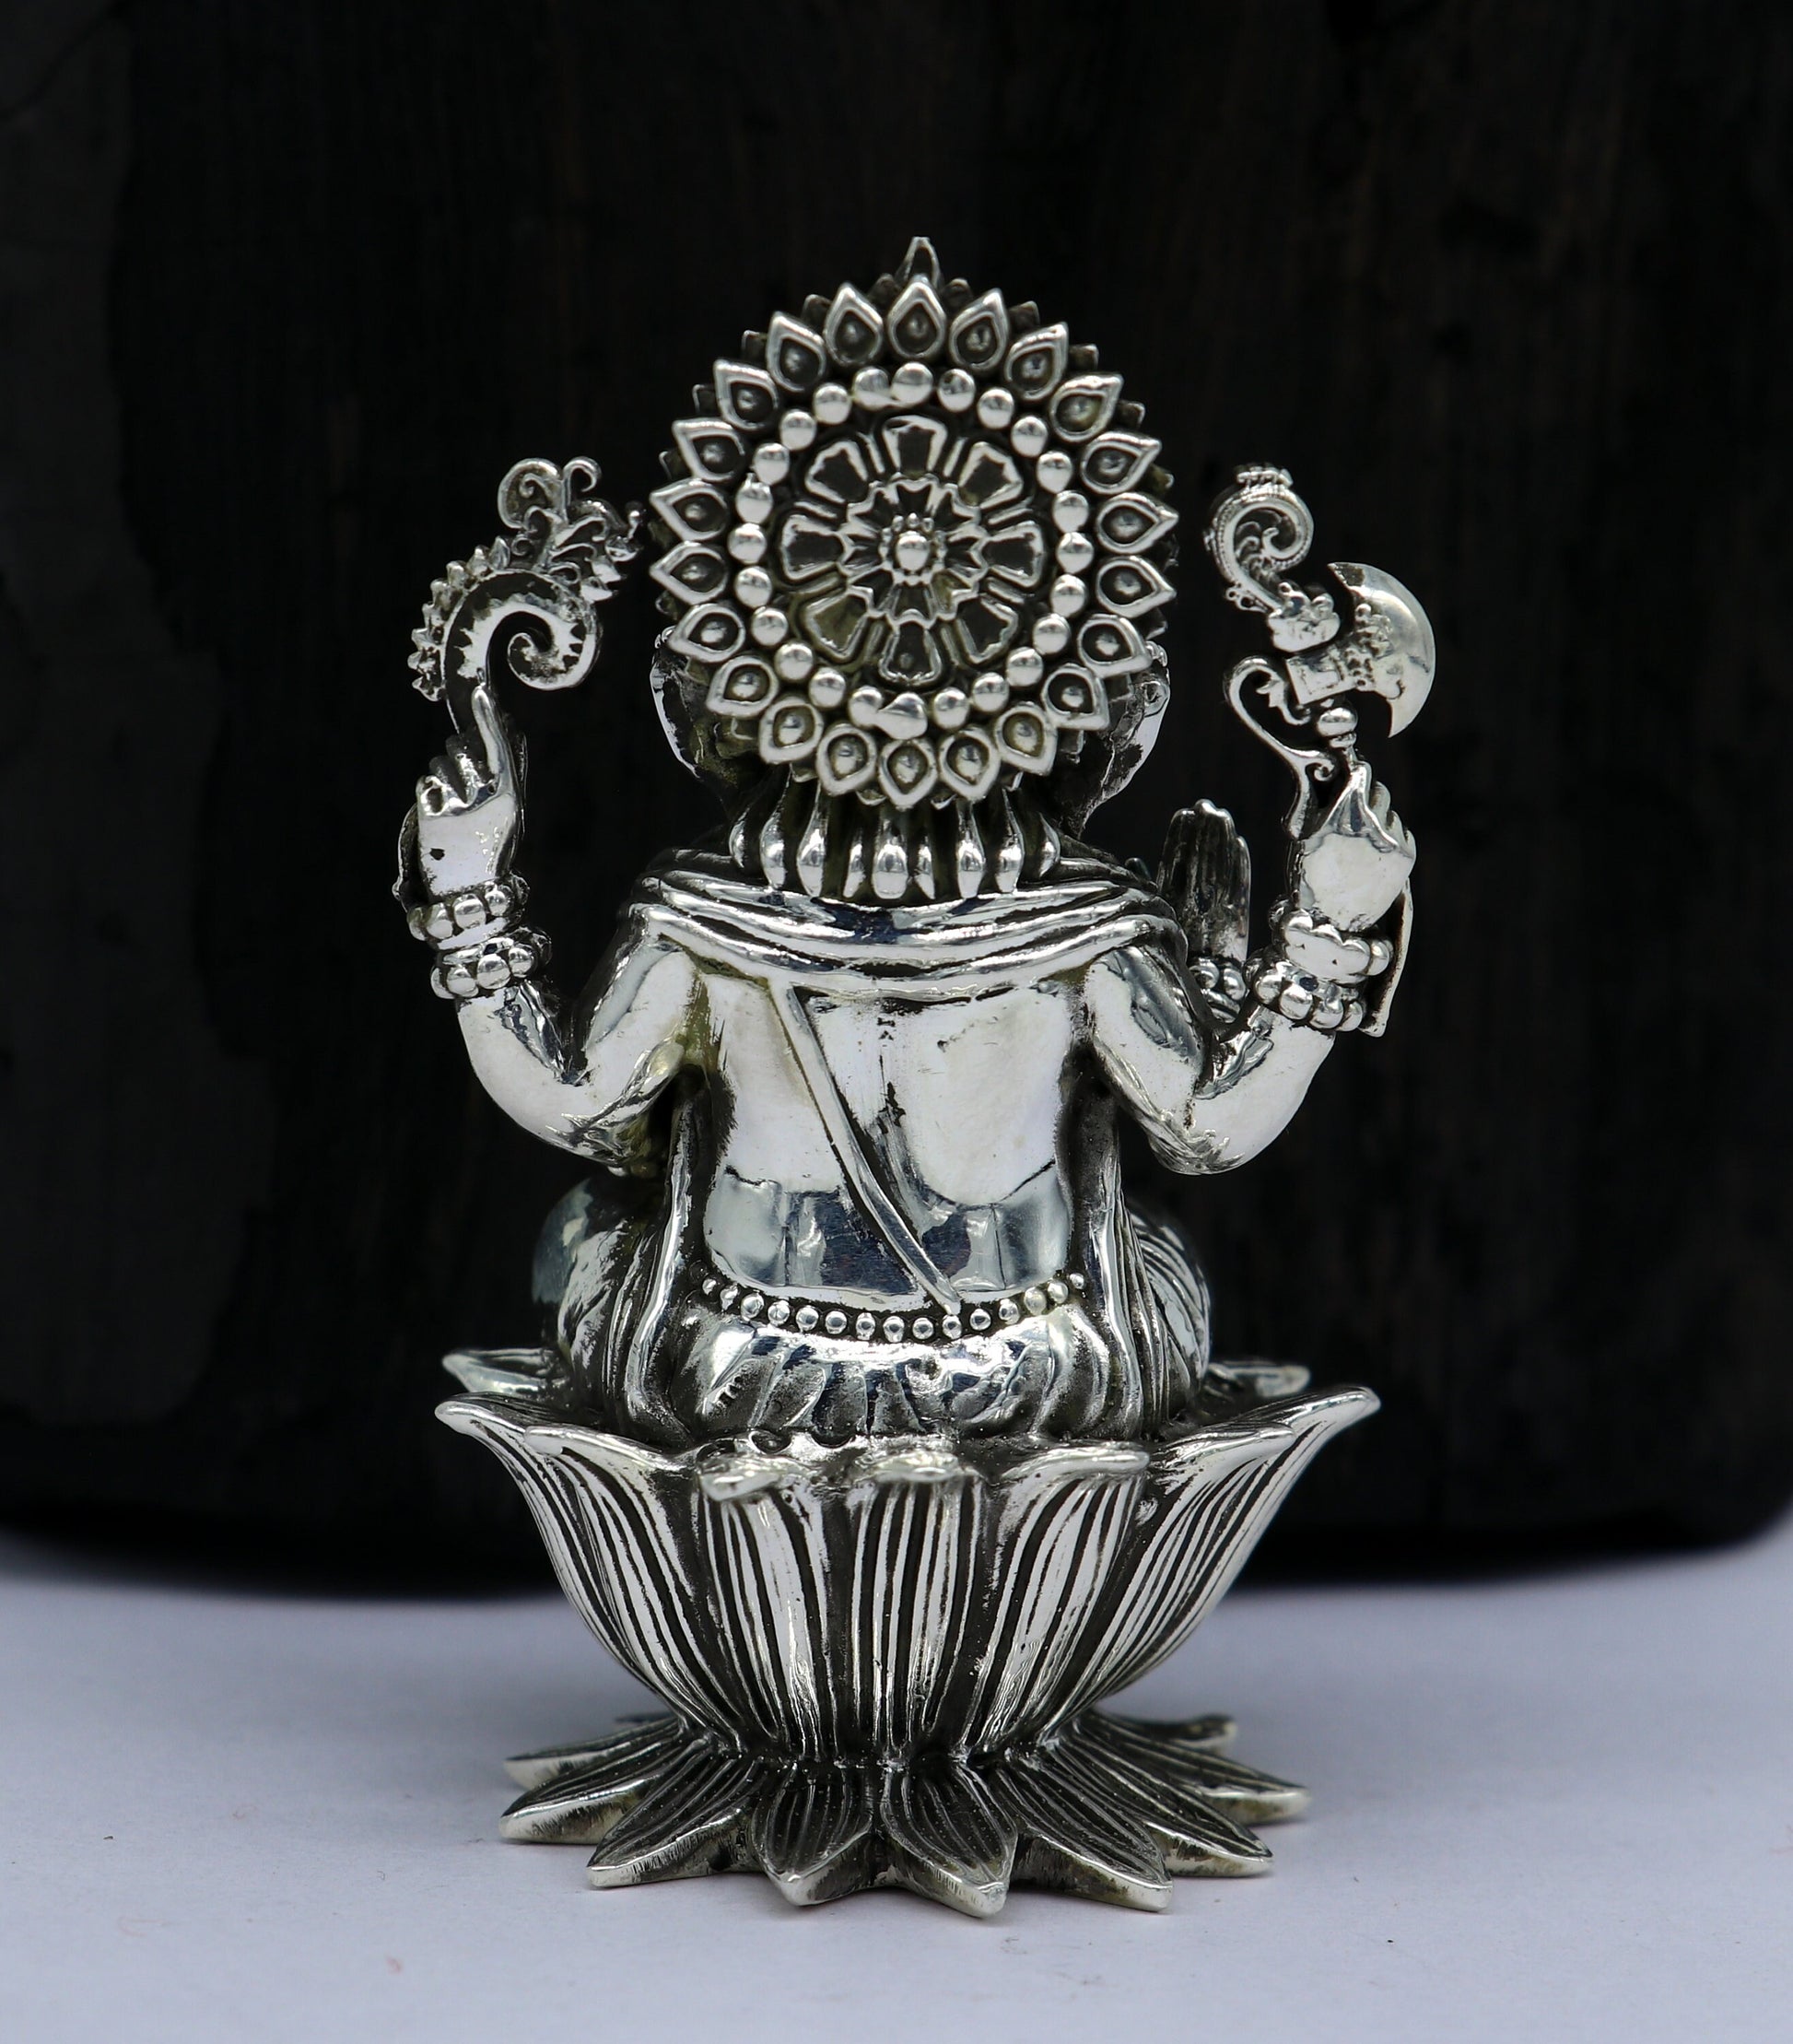 925 Sterling silver Lord Ganesh Idol, Pooja Articles, Silver Idols Figurine, handcrafted Lord Ganesh statue sculpture Diwali puja gift su212 - TRIBAL ORNAMENTS